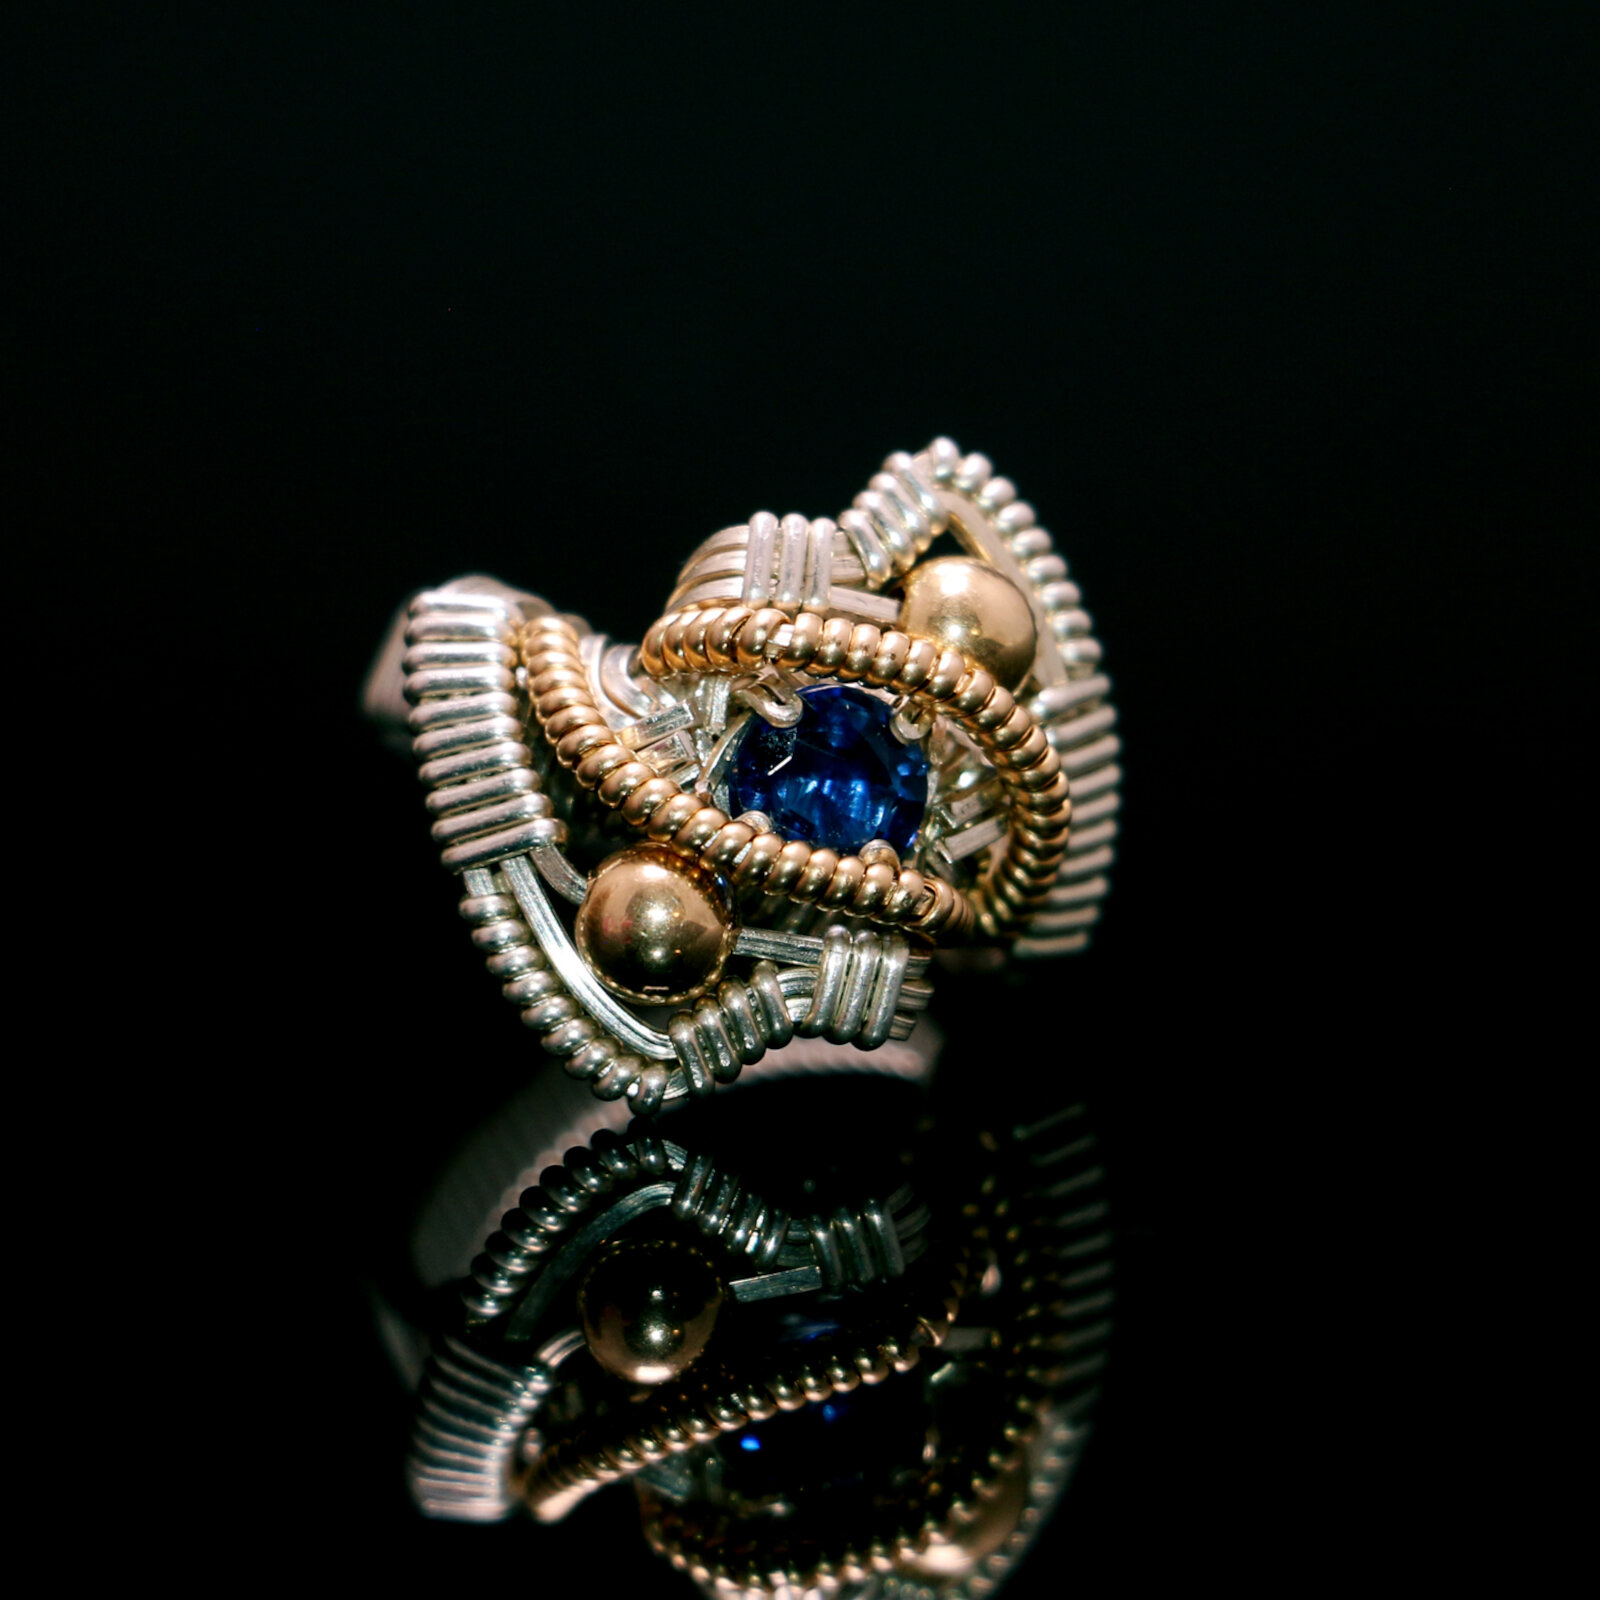 Blue Tourmaline Ring